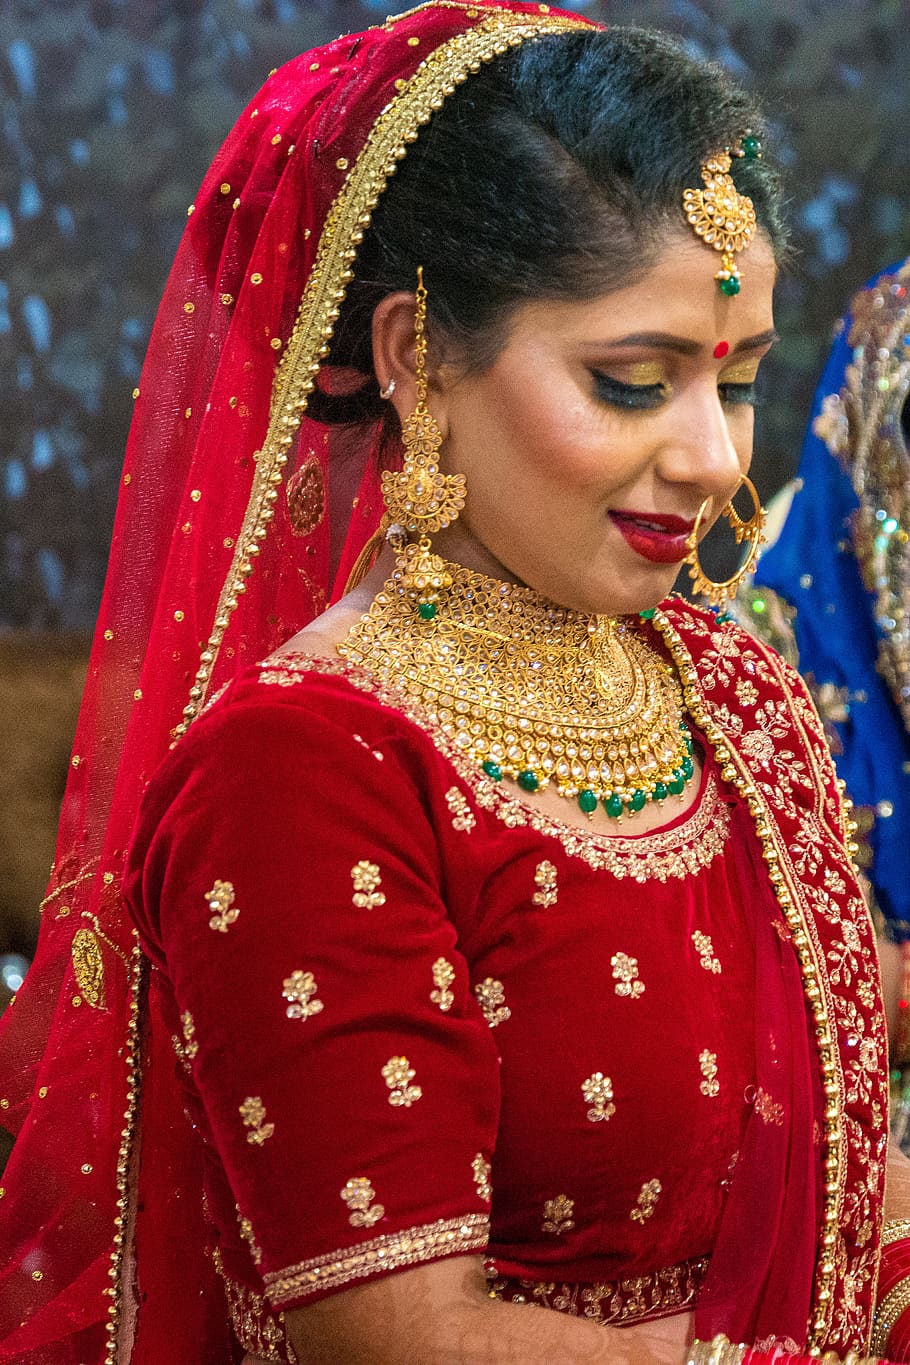 bride, indian bride, wedding, indian, woman, mehndi, female, traditional clothing, clothing, women